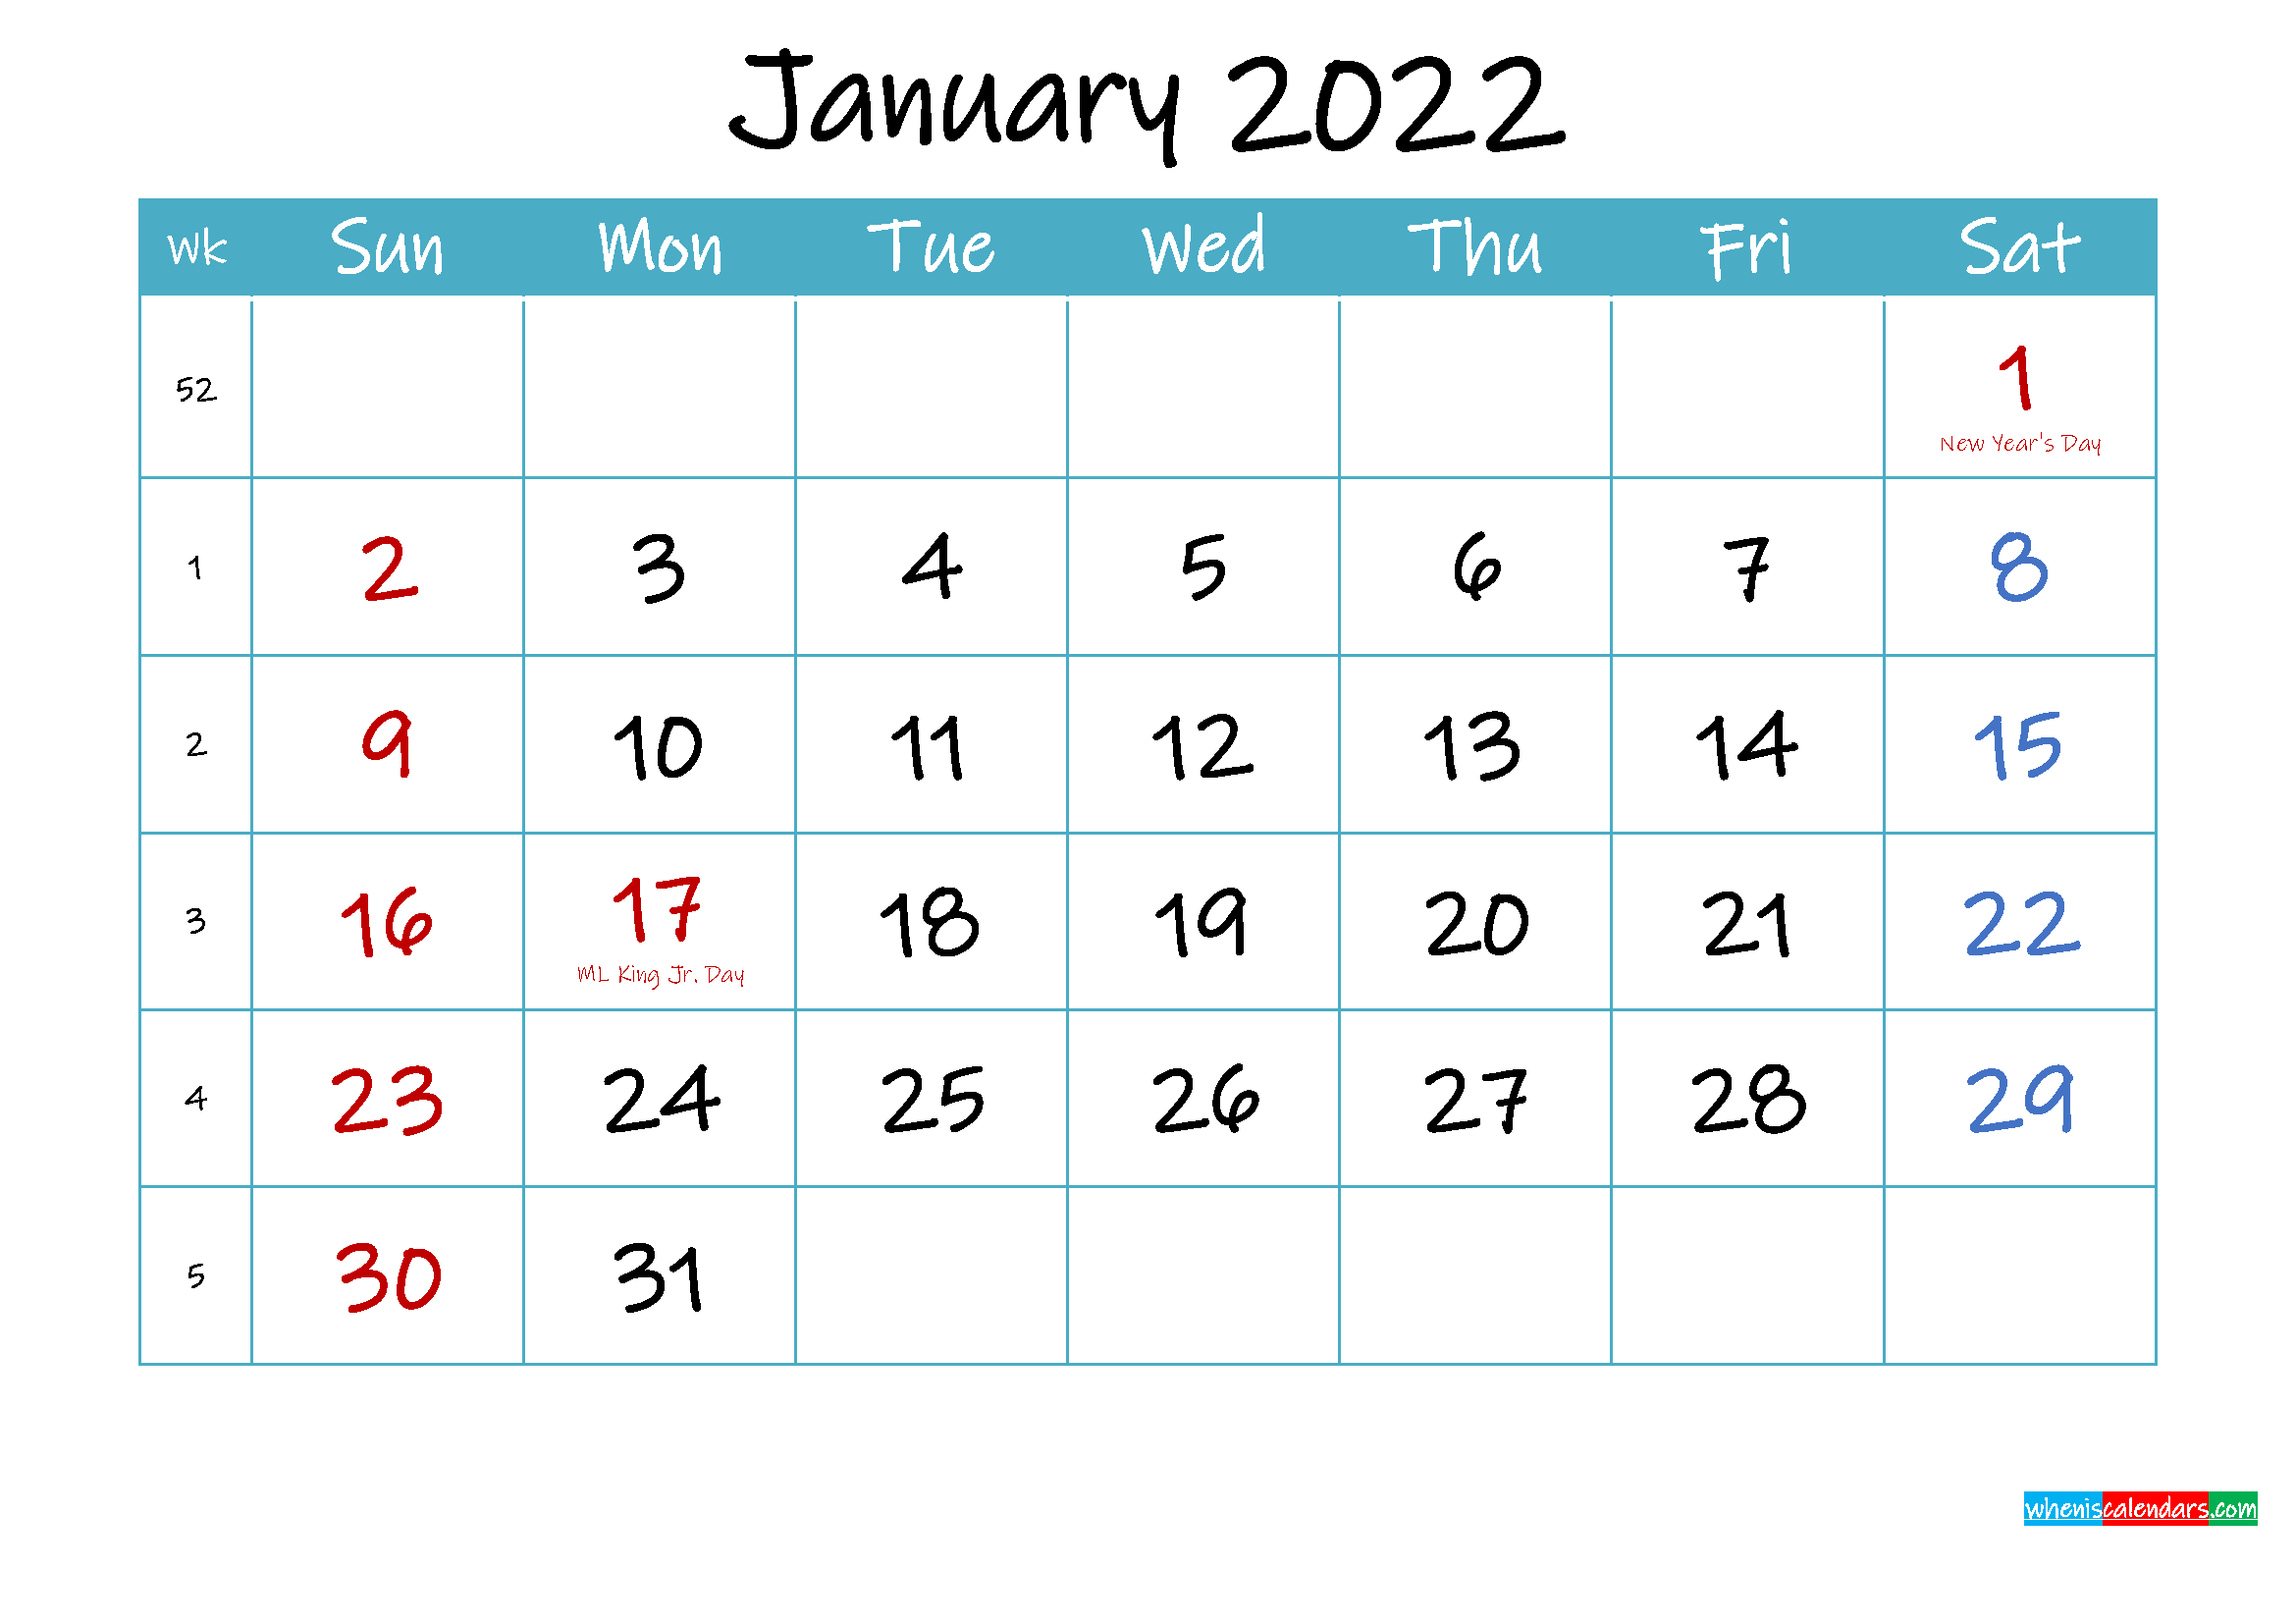 Catch January 2022 Calendar Download